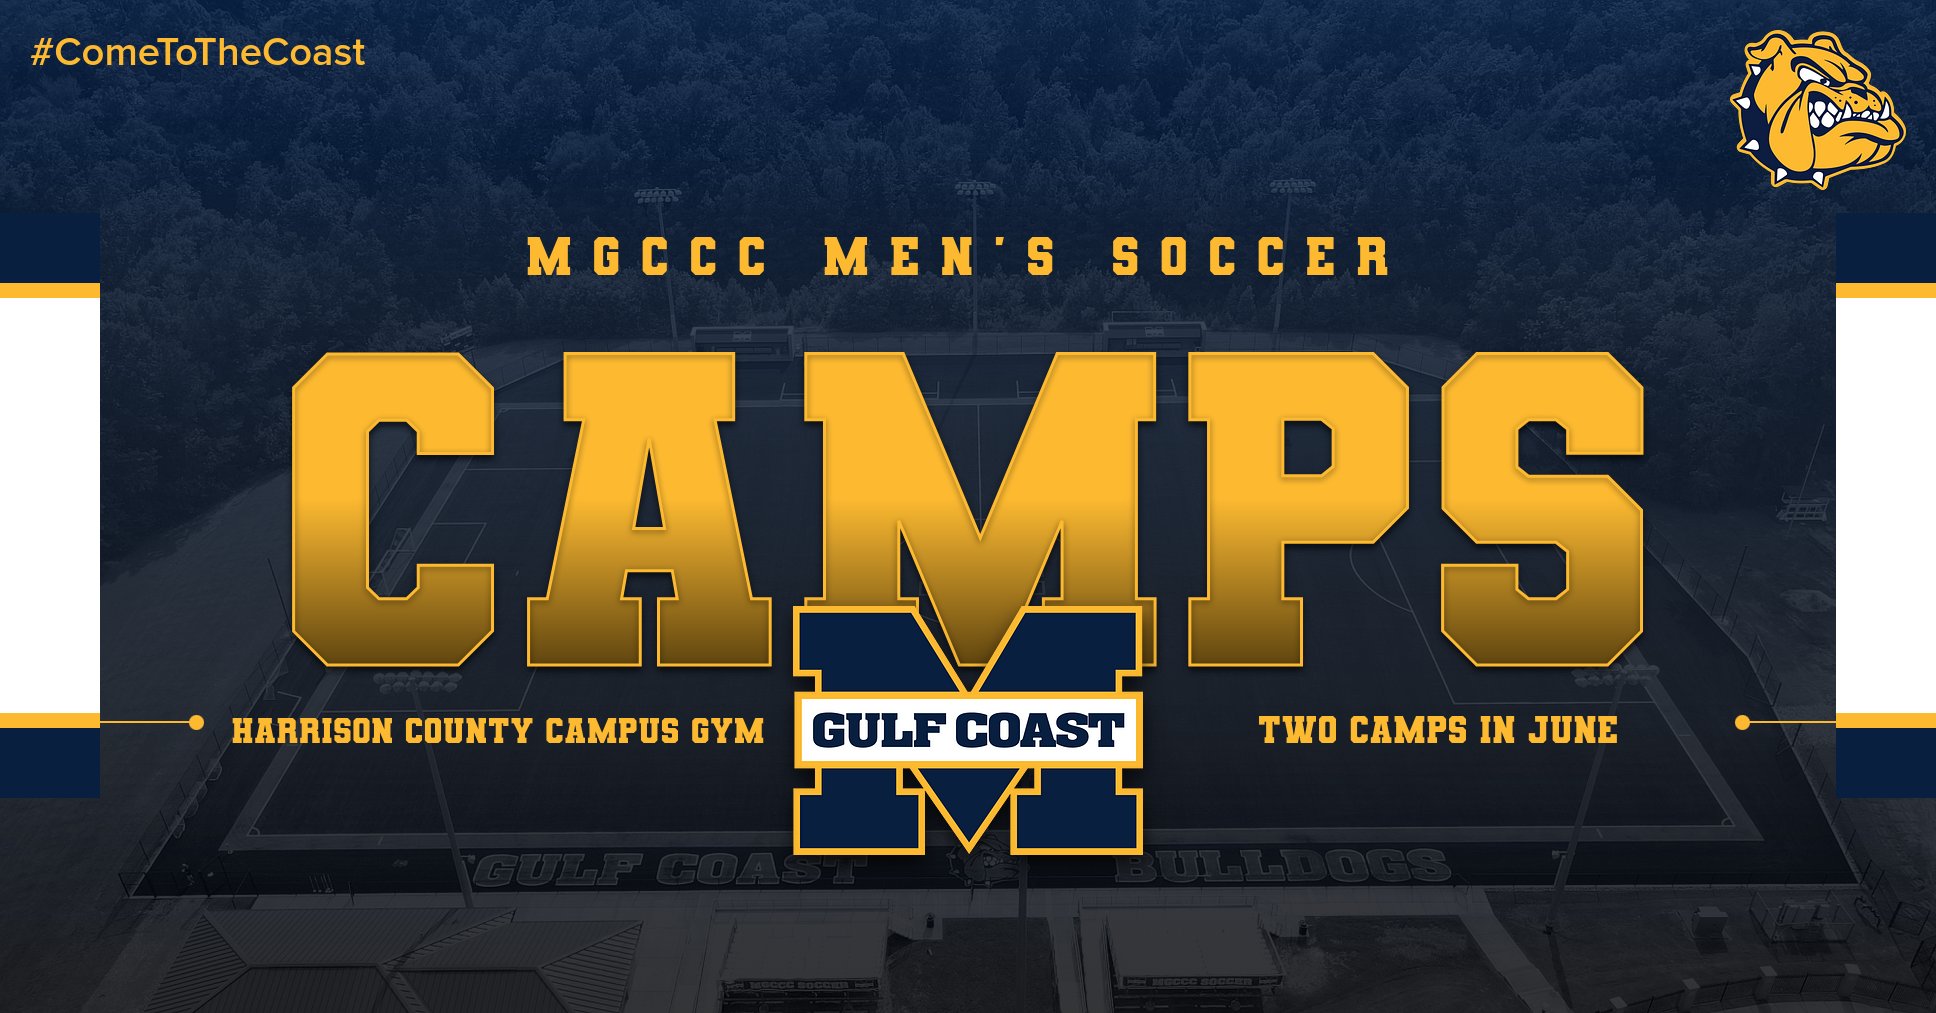 Men’s Soccer will host 2 camps